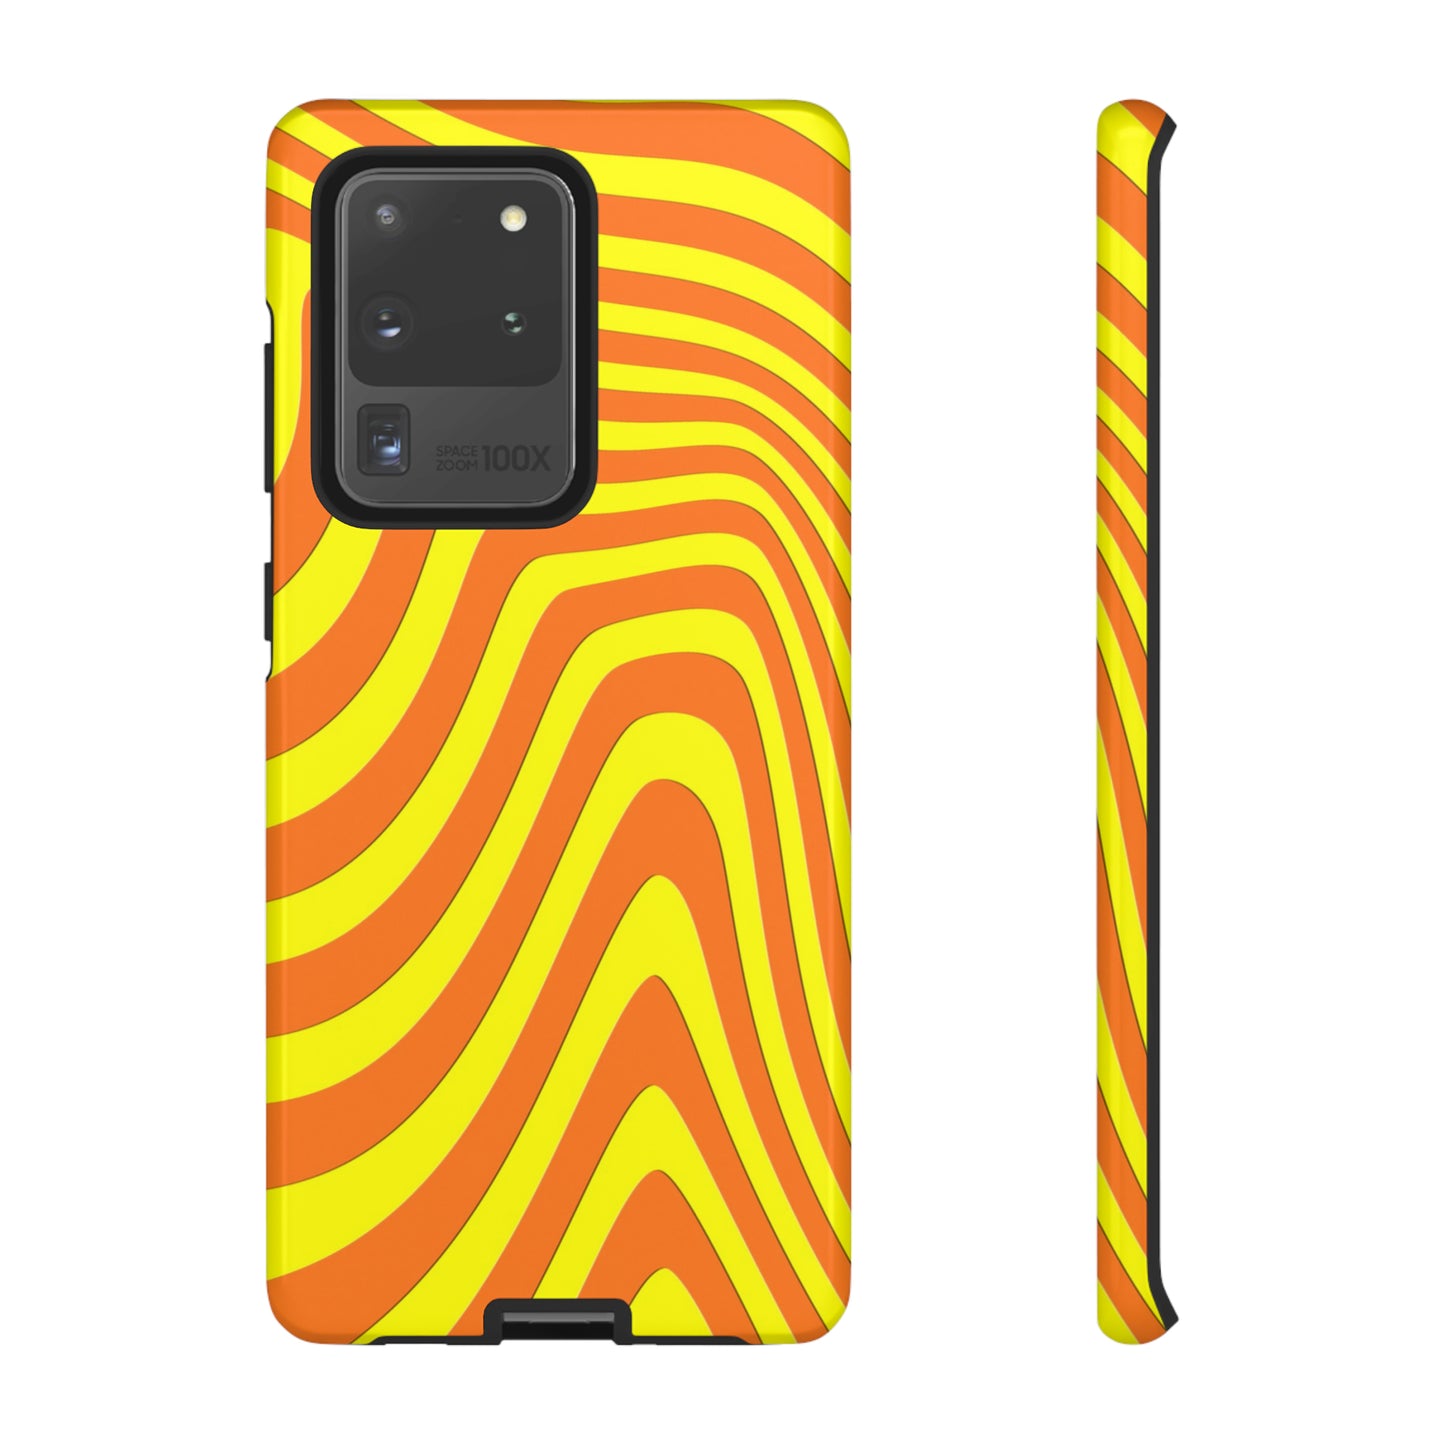 Retro wavy - yellow and orange - Tough Cases